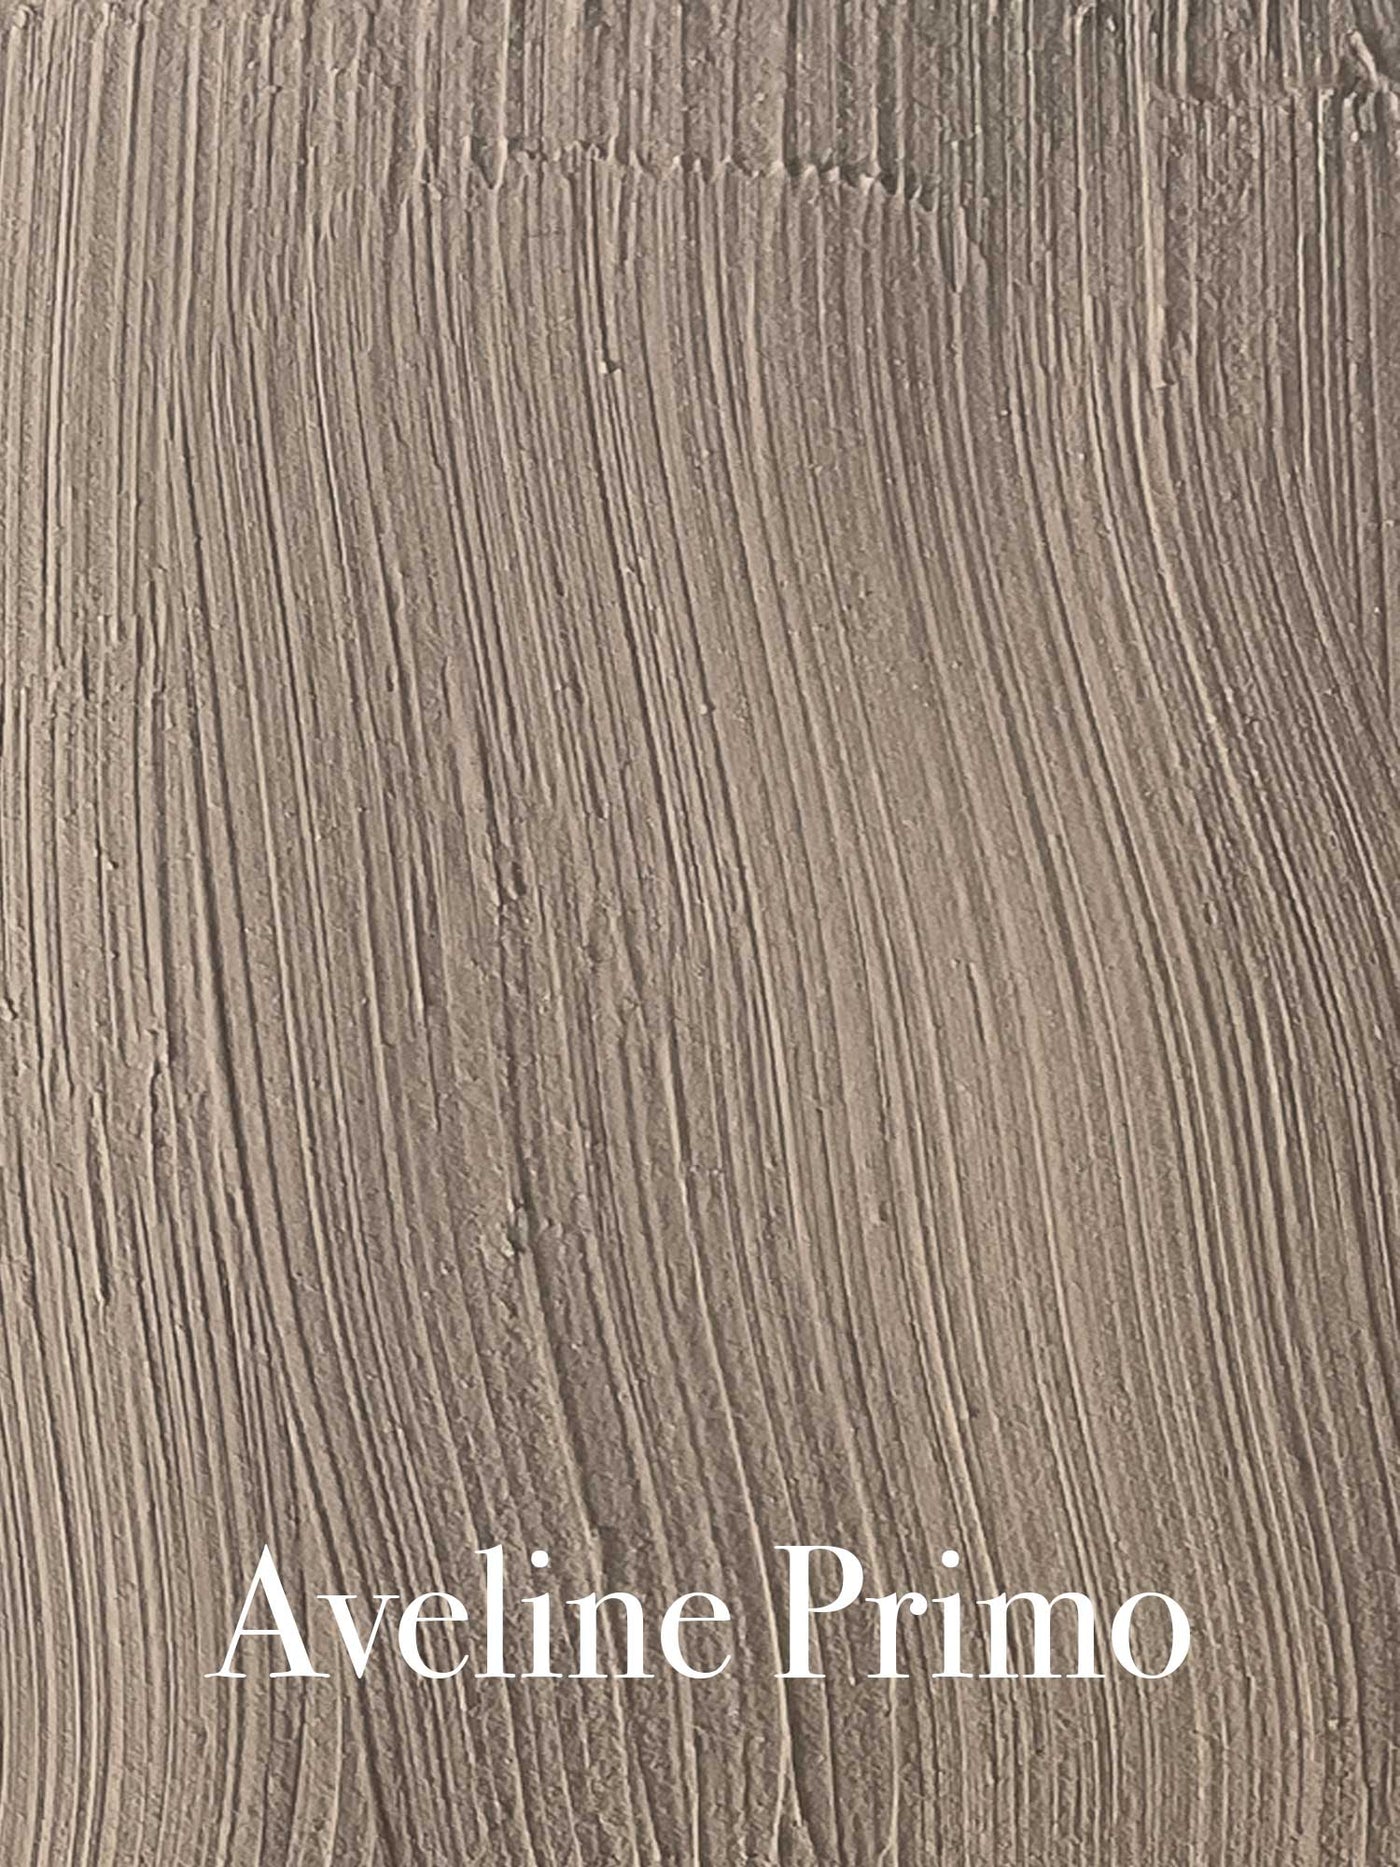 Aveline Primo  /discontinued